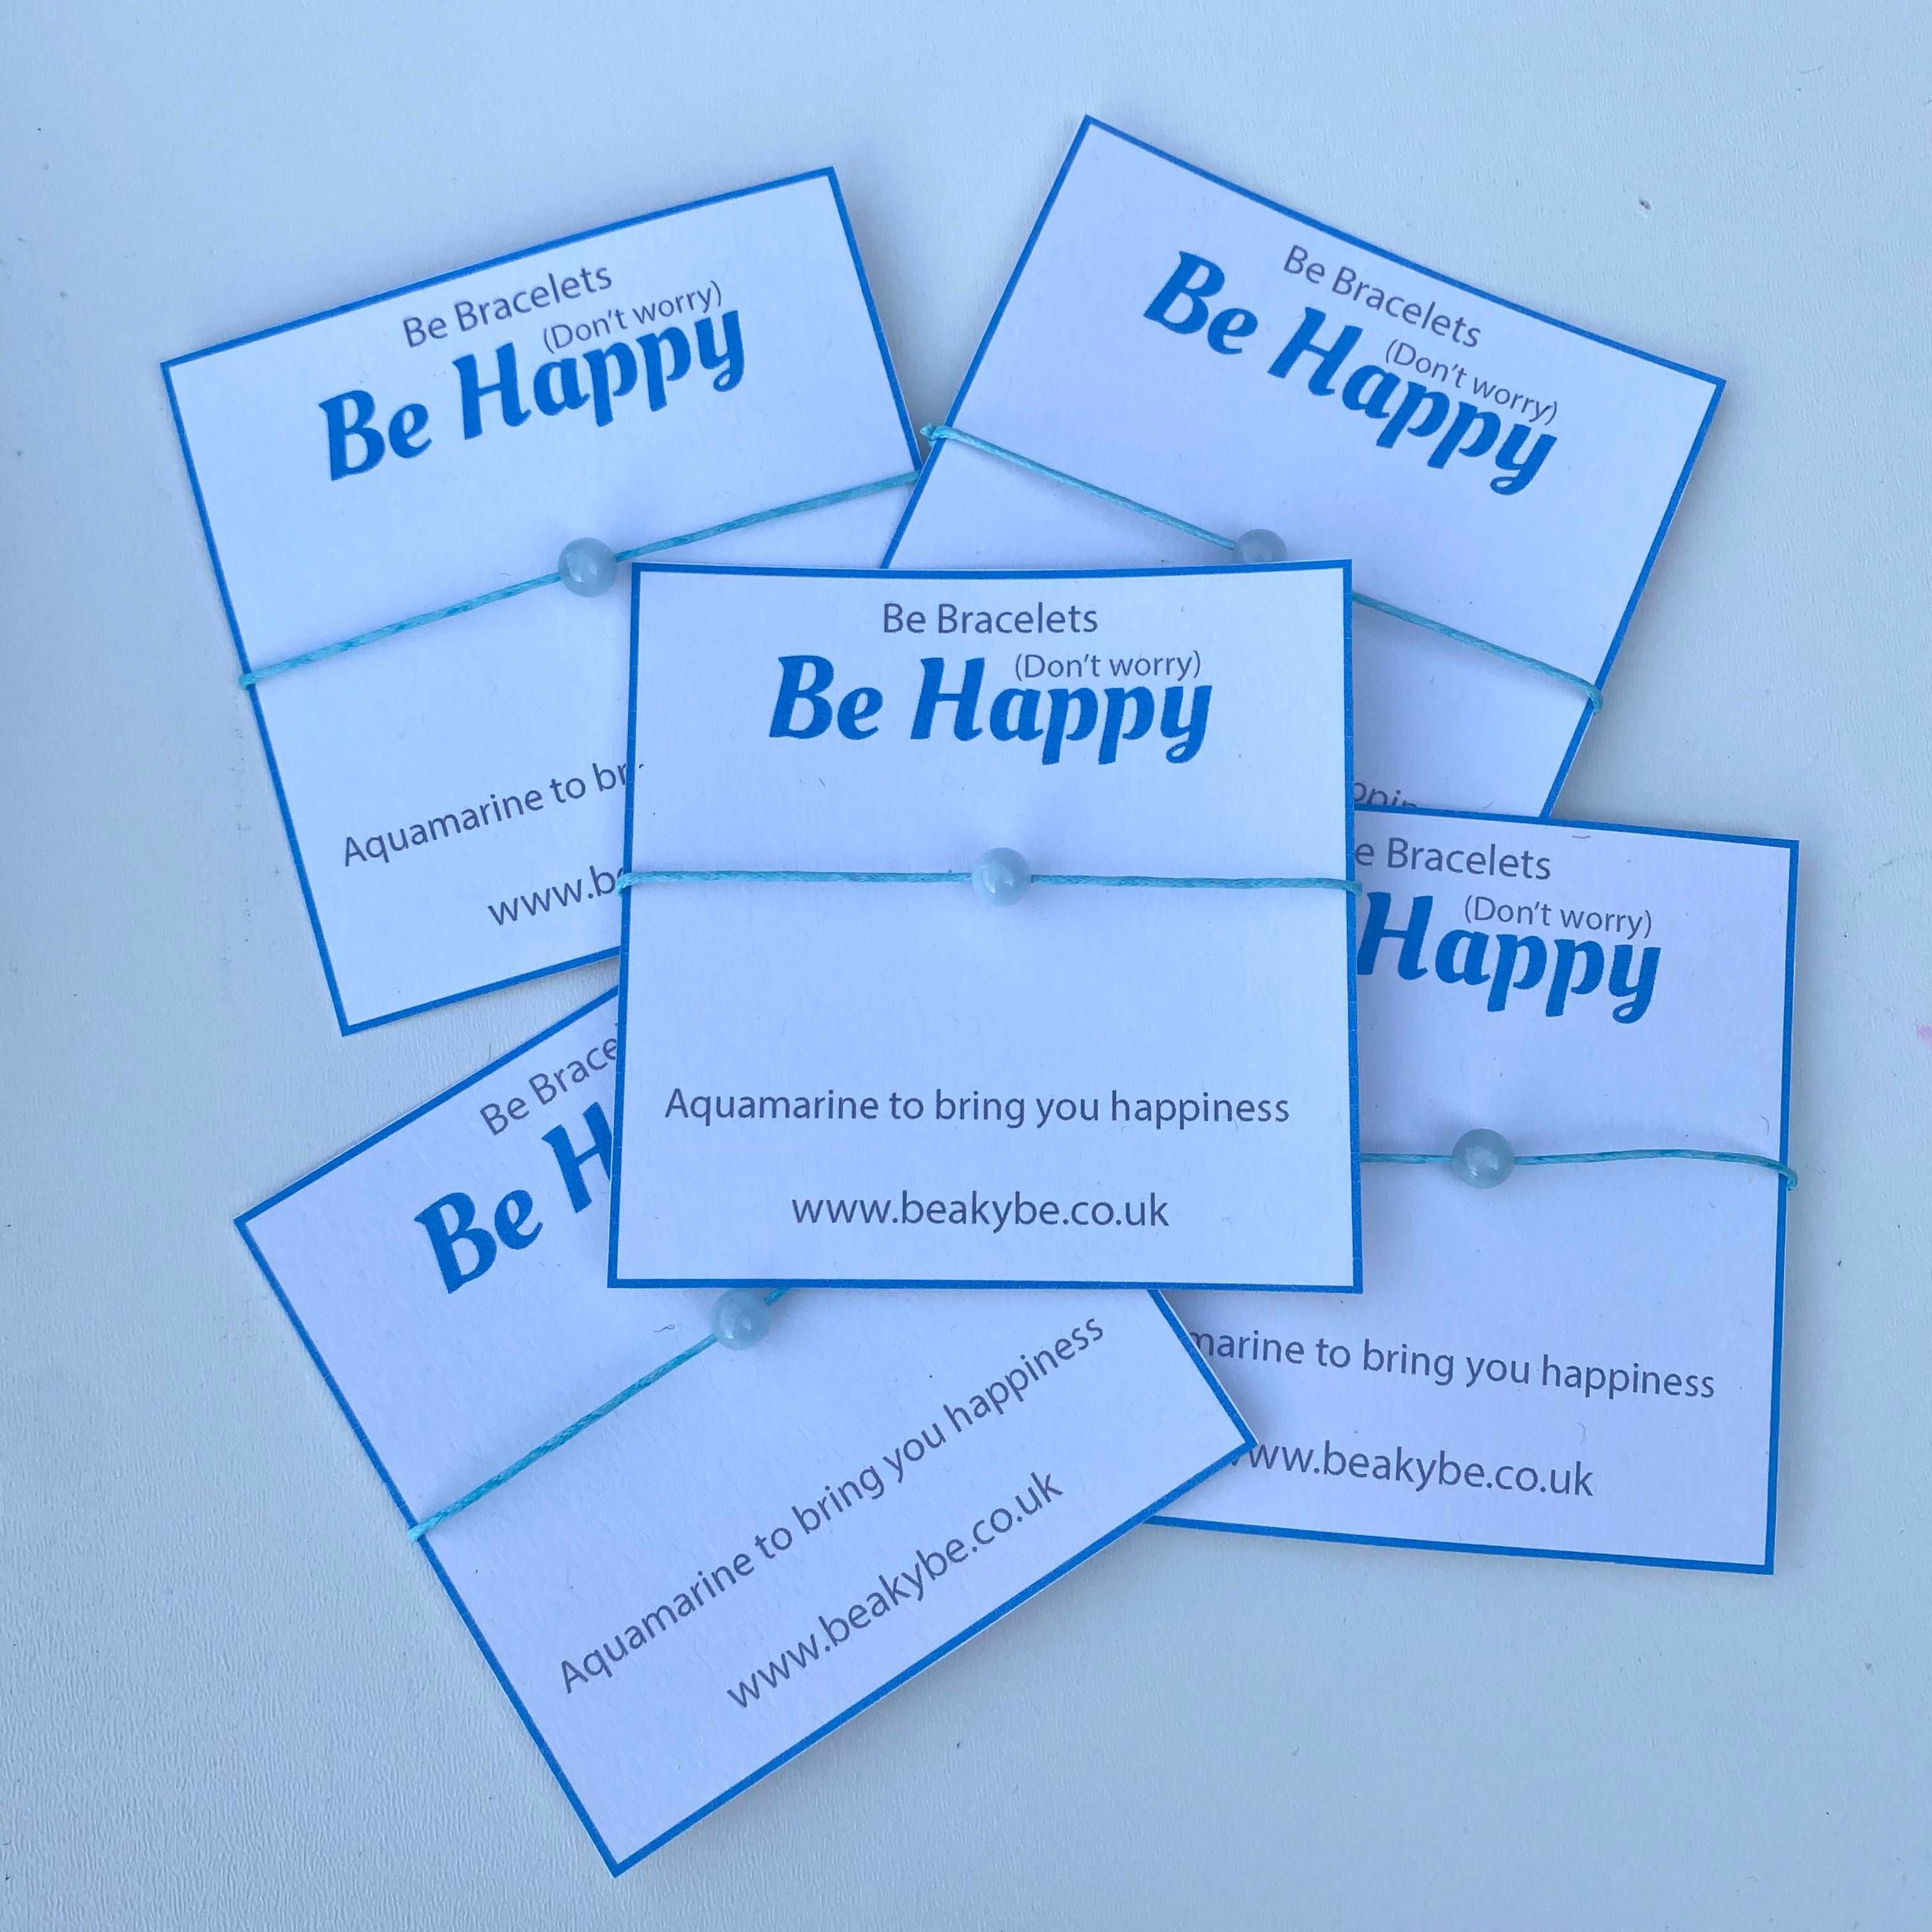 Be Happy - Be Bracelet - Aquamarine String Bracelet Gifts